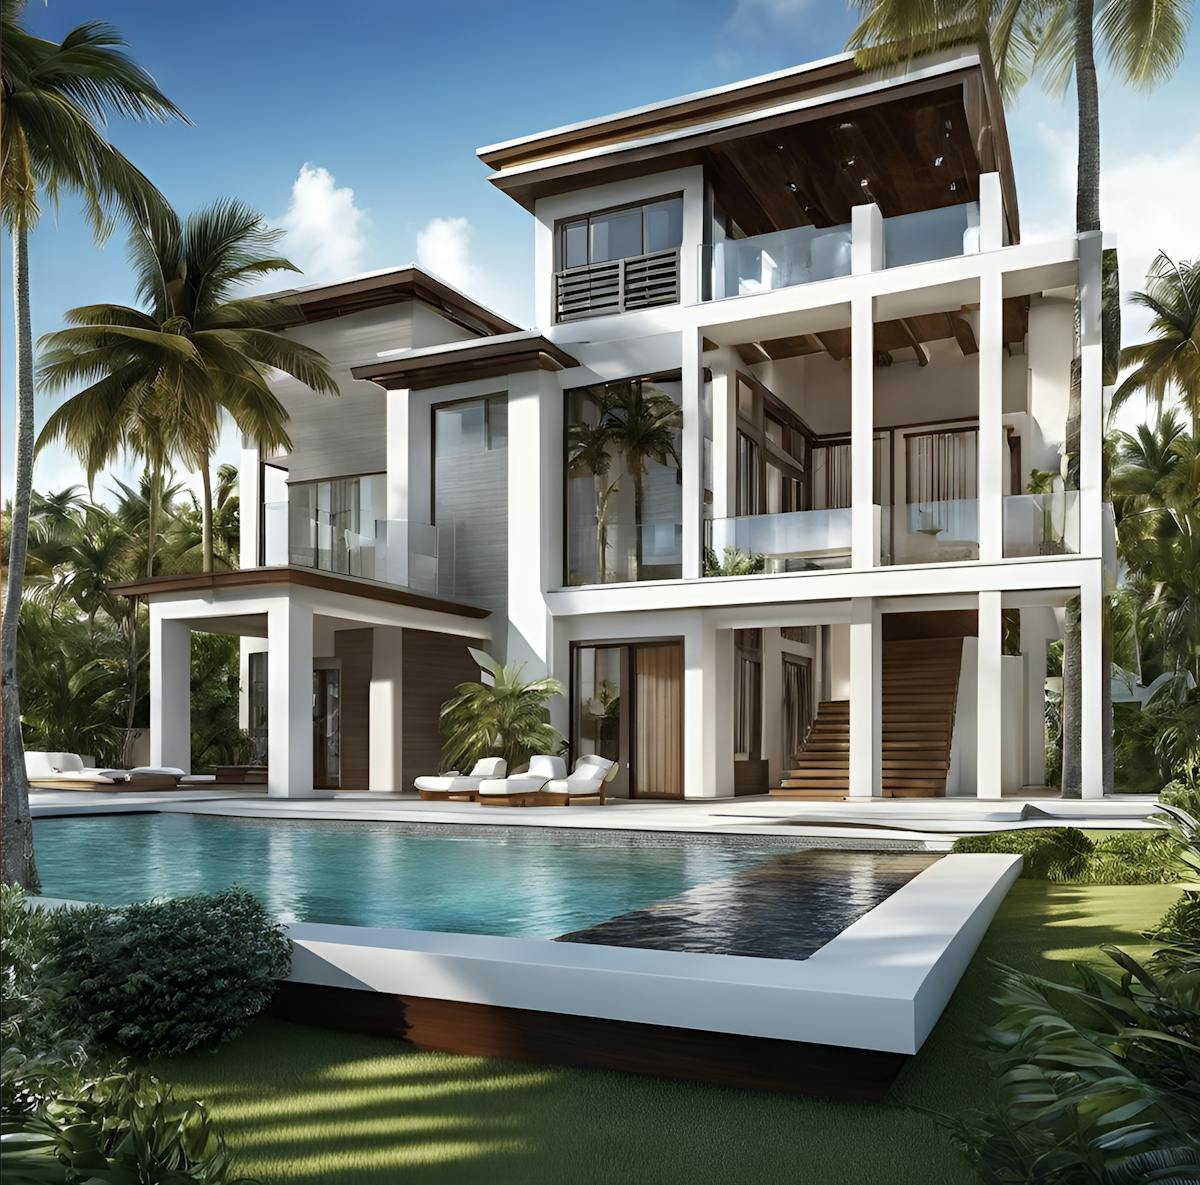 Nassau Bahamas homes for sale